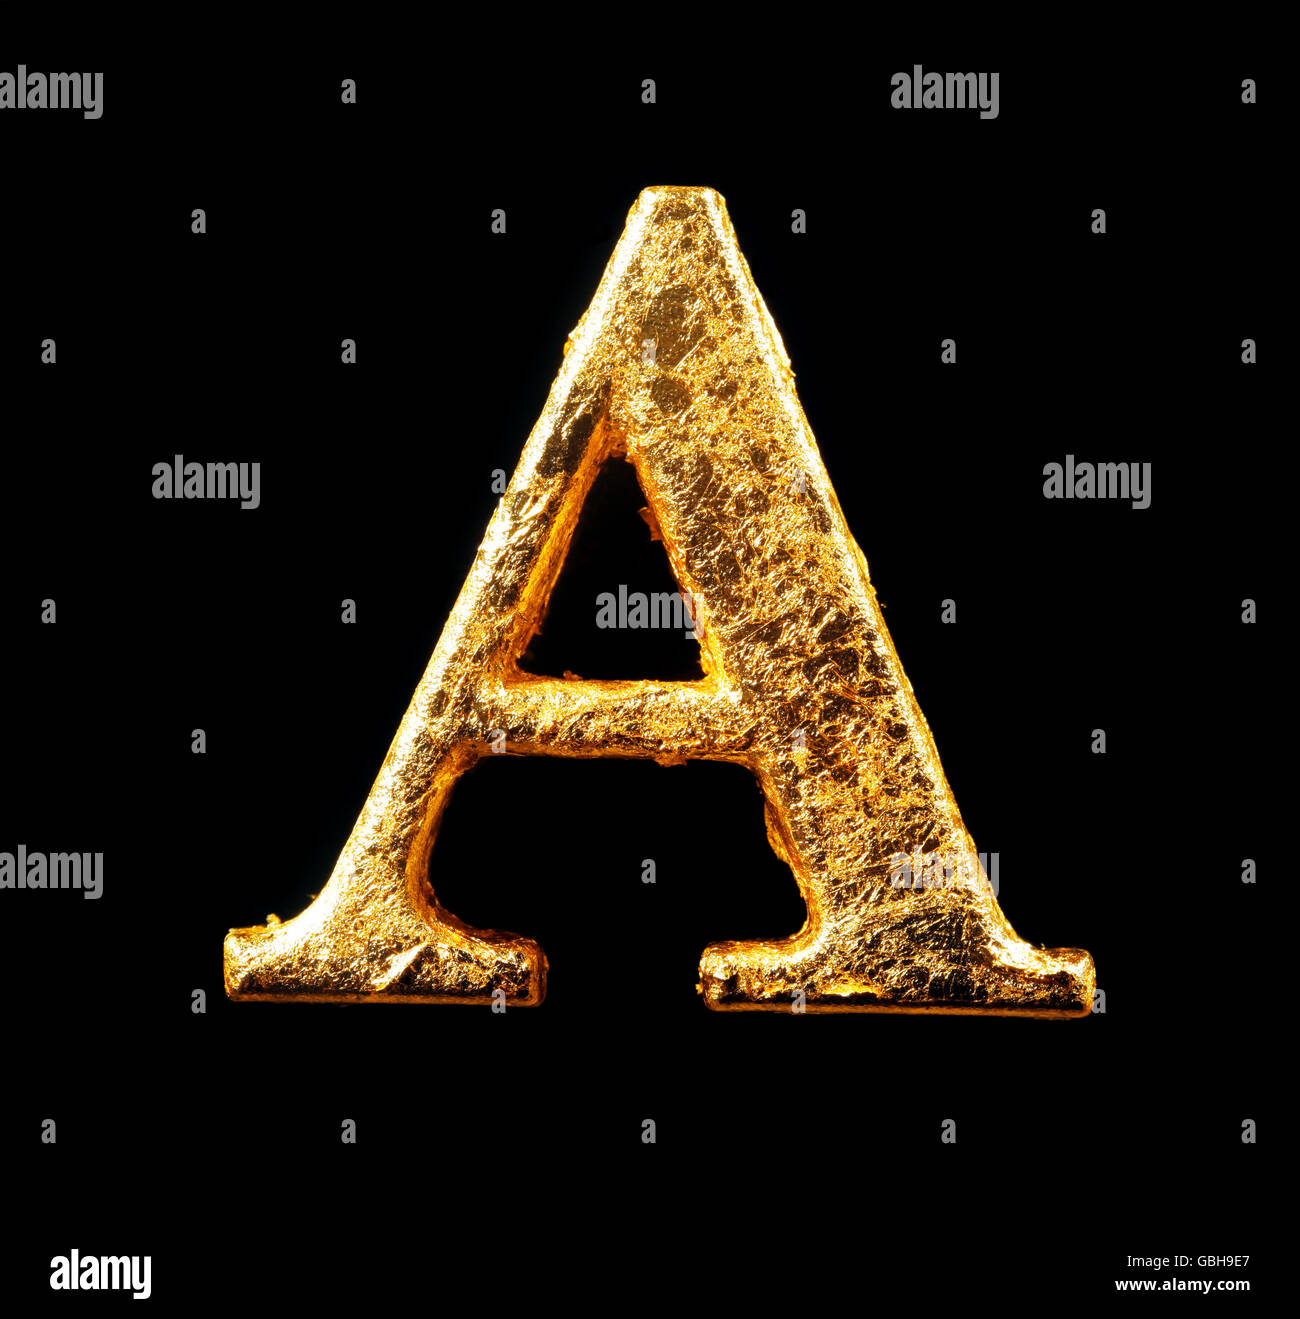 Gold Alphabet 